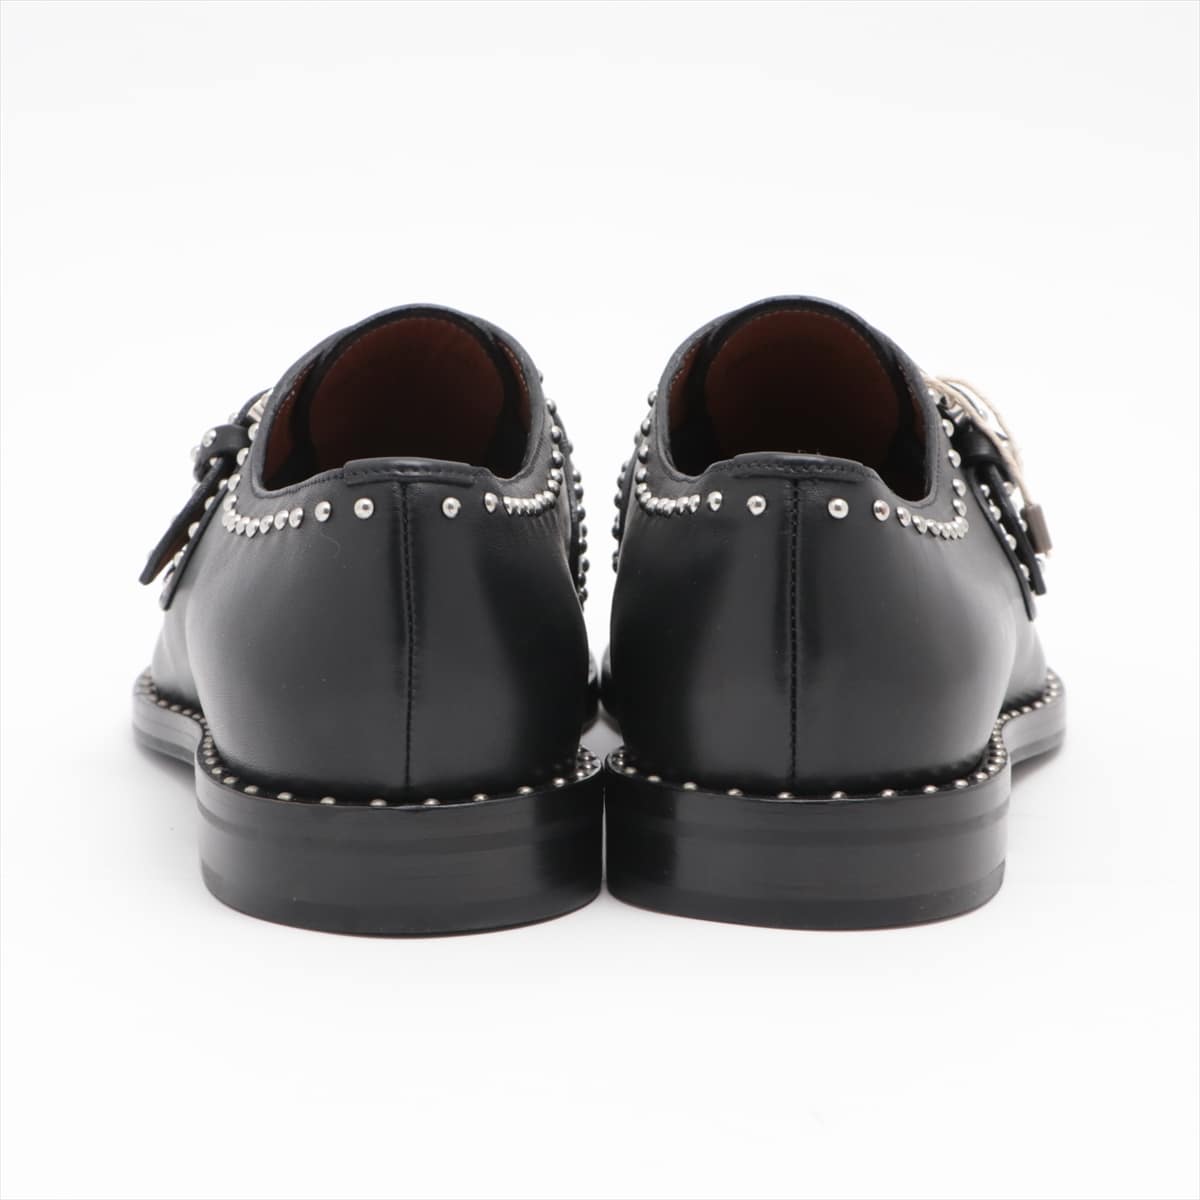 Givenchy Leather Dress shoes 40 Unisex Black Monkstraps Studs